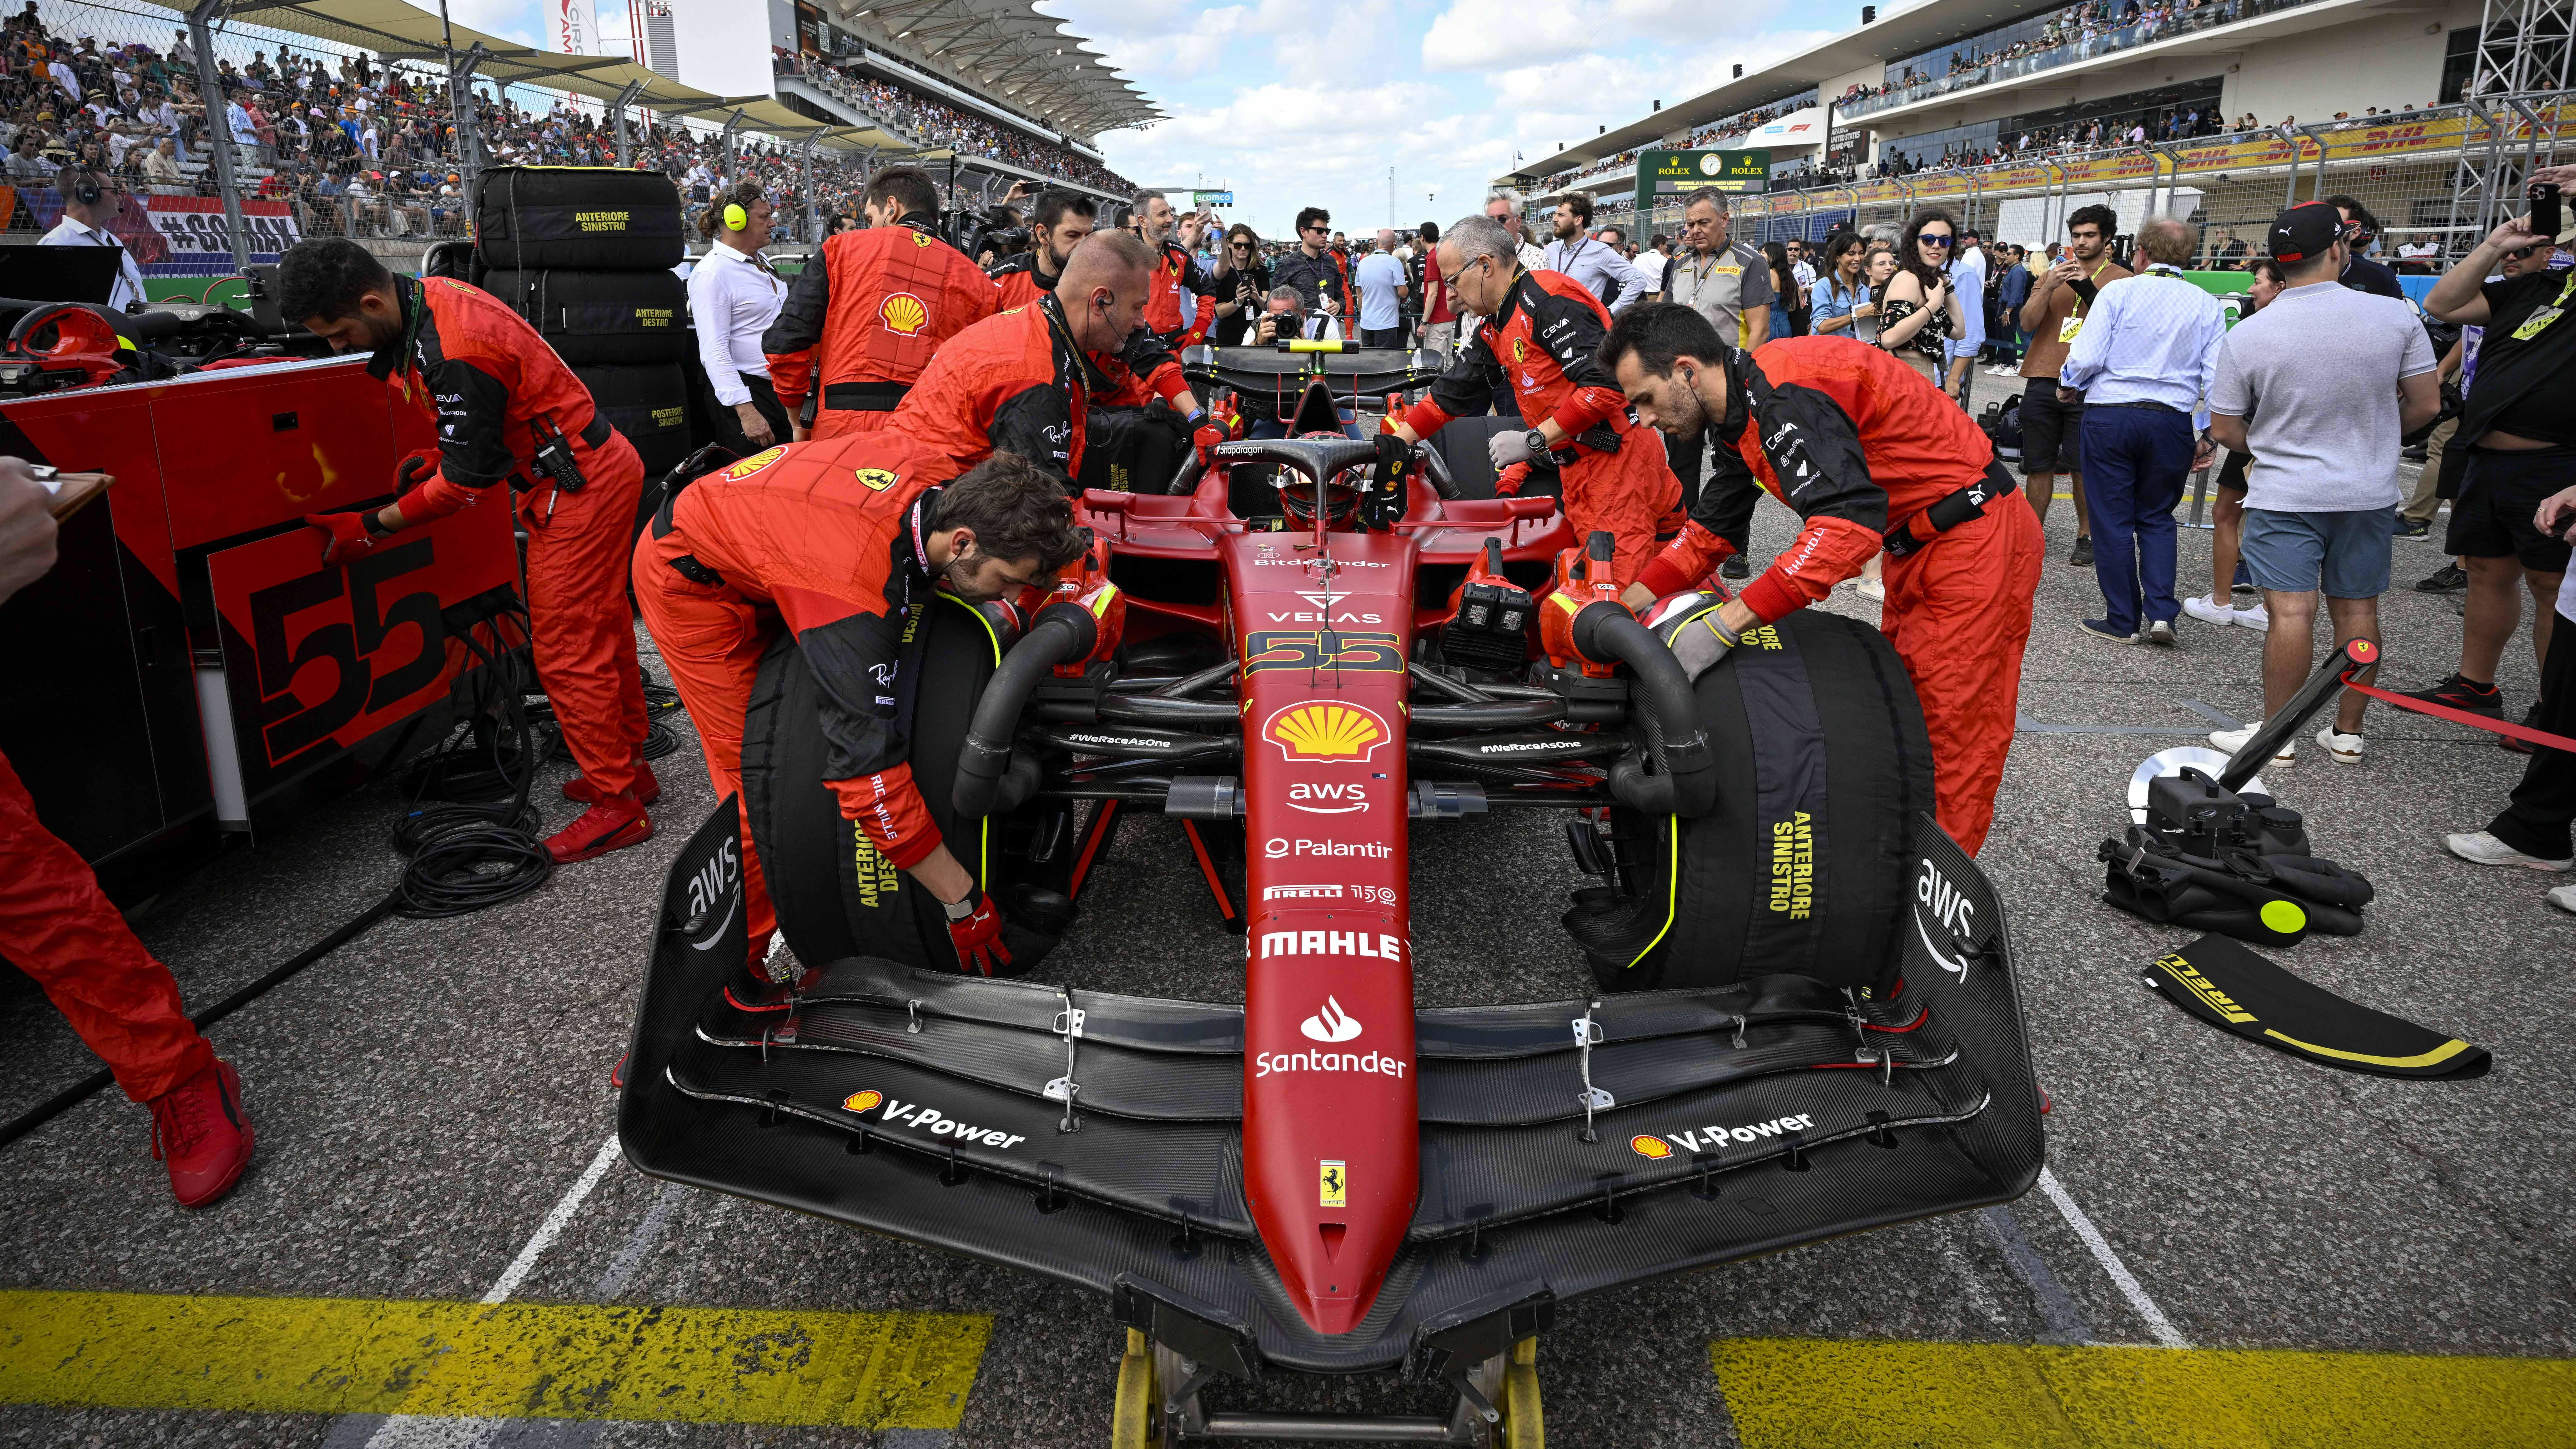 Ferrari F1 News: Team Announces Huge New Partnership Ahead of Miami GP